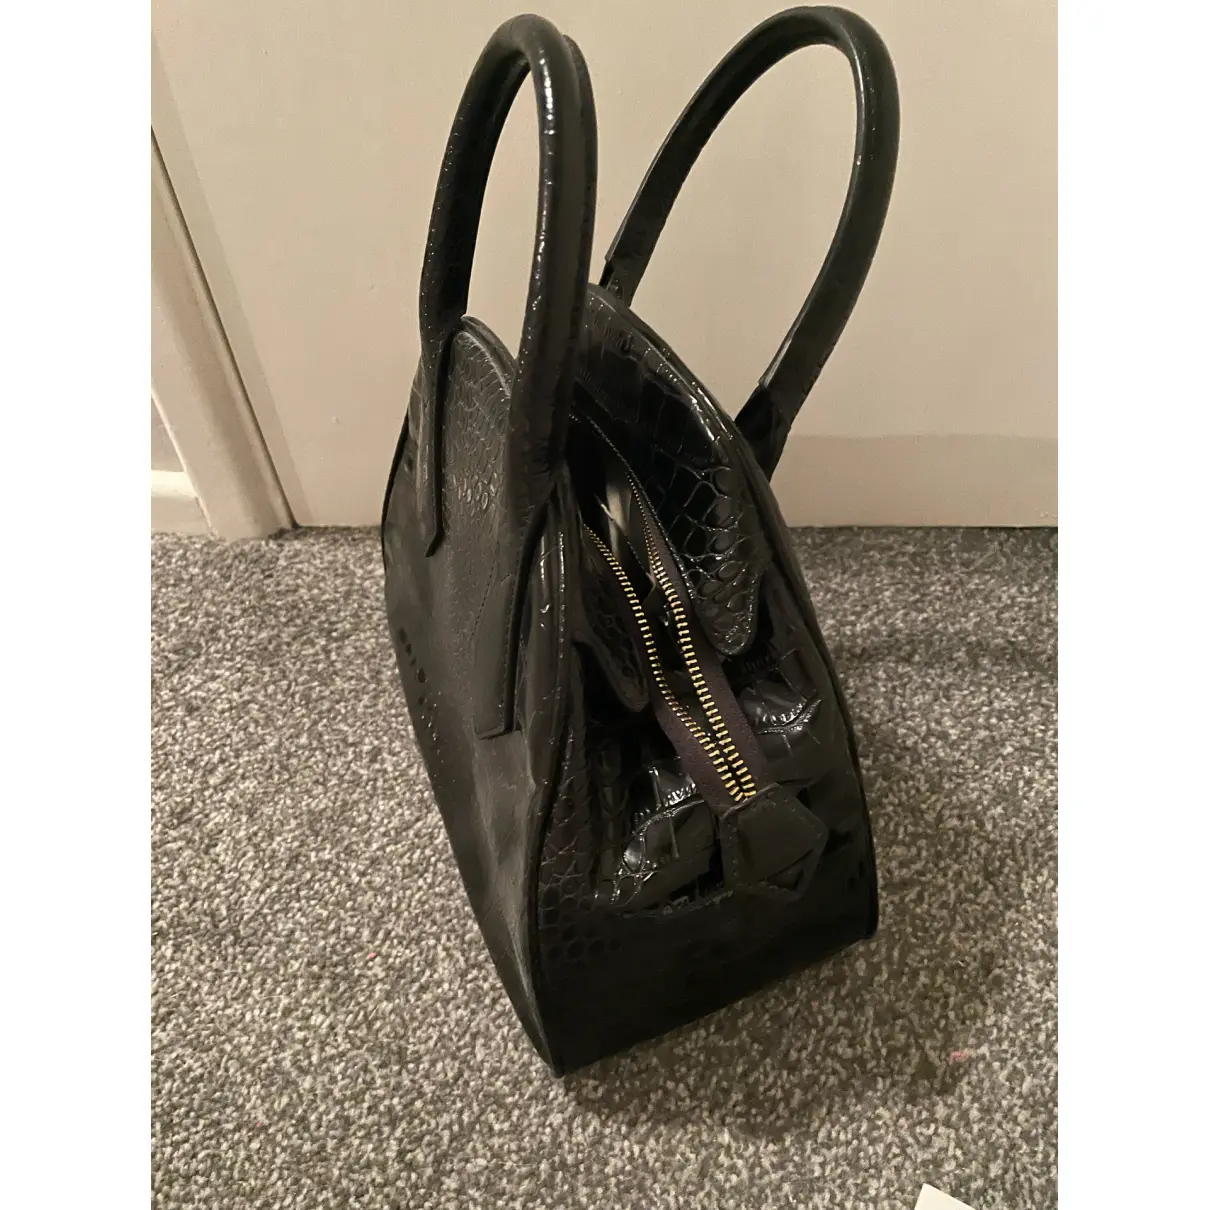 Buy Vivienne Westwood Leather bowling bag online